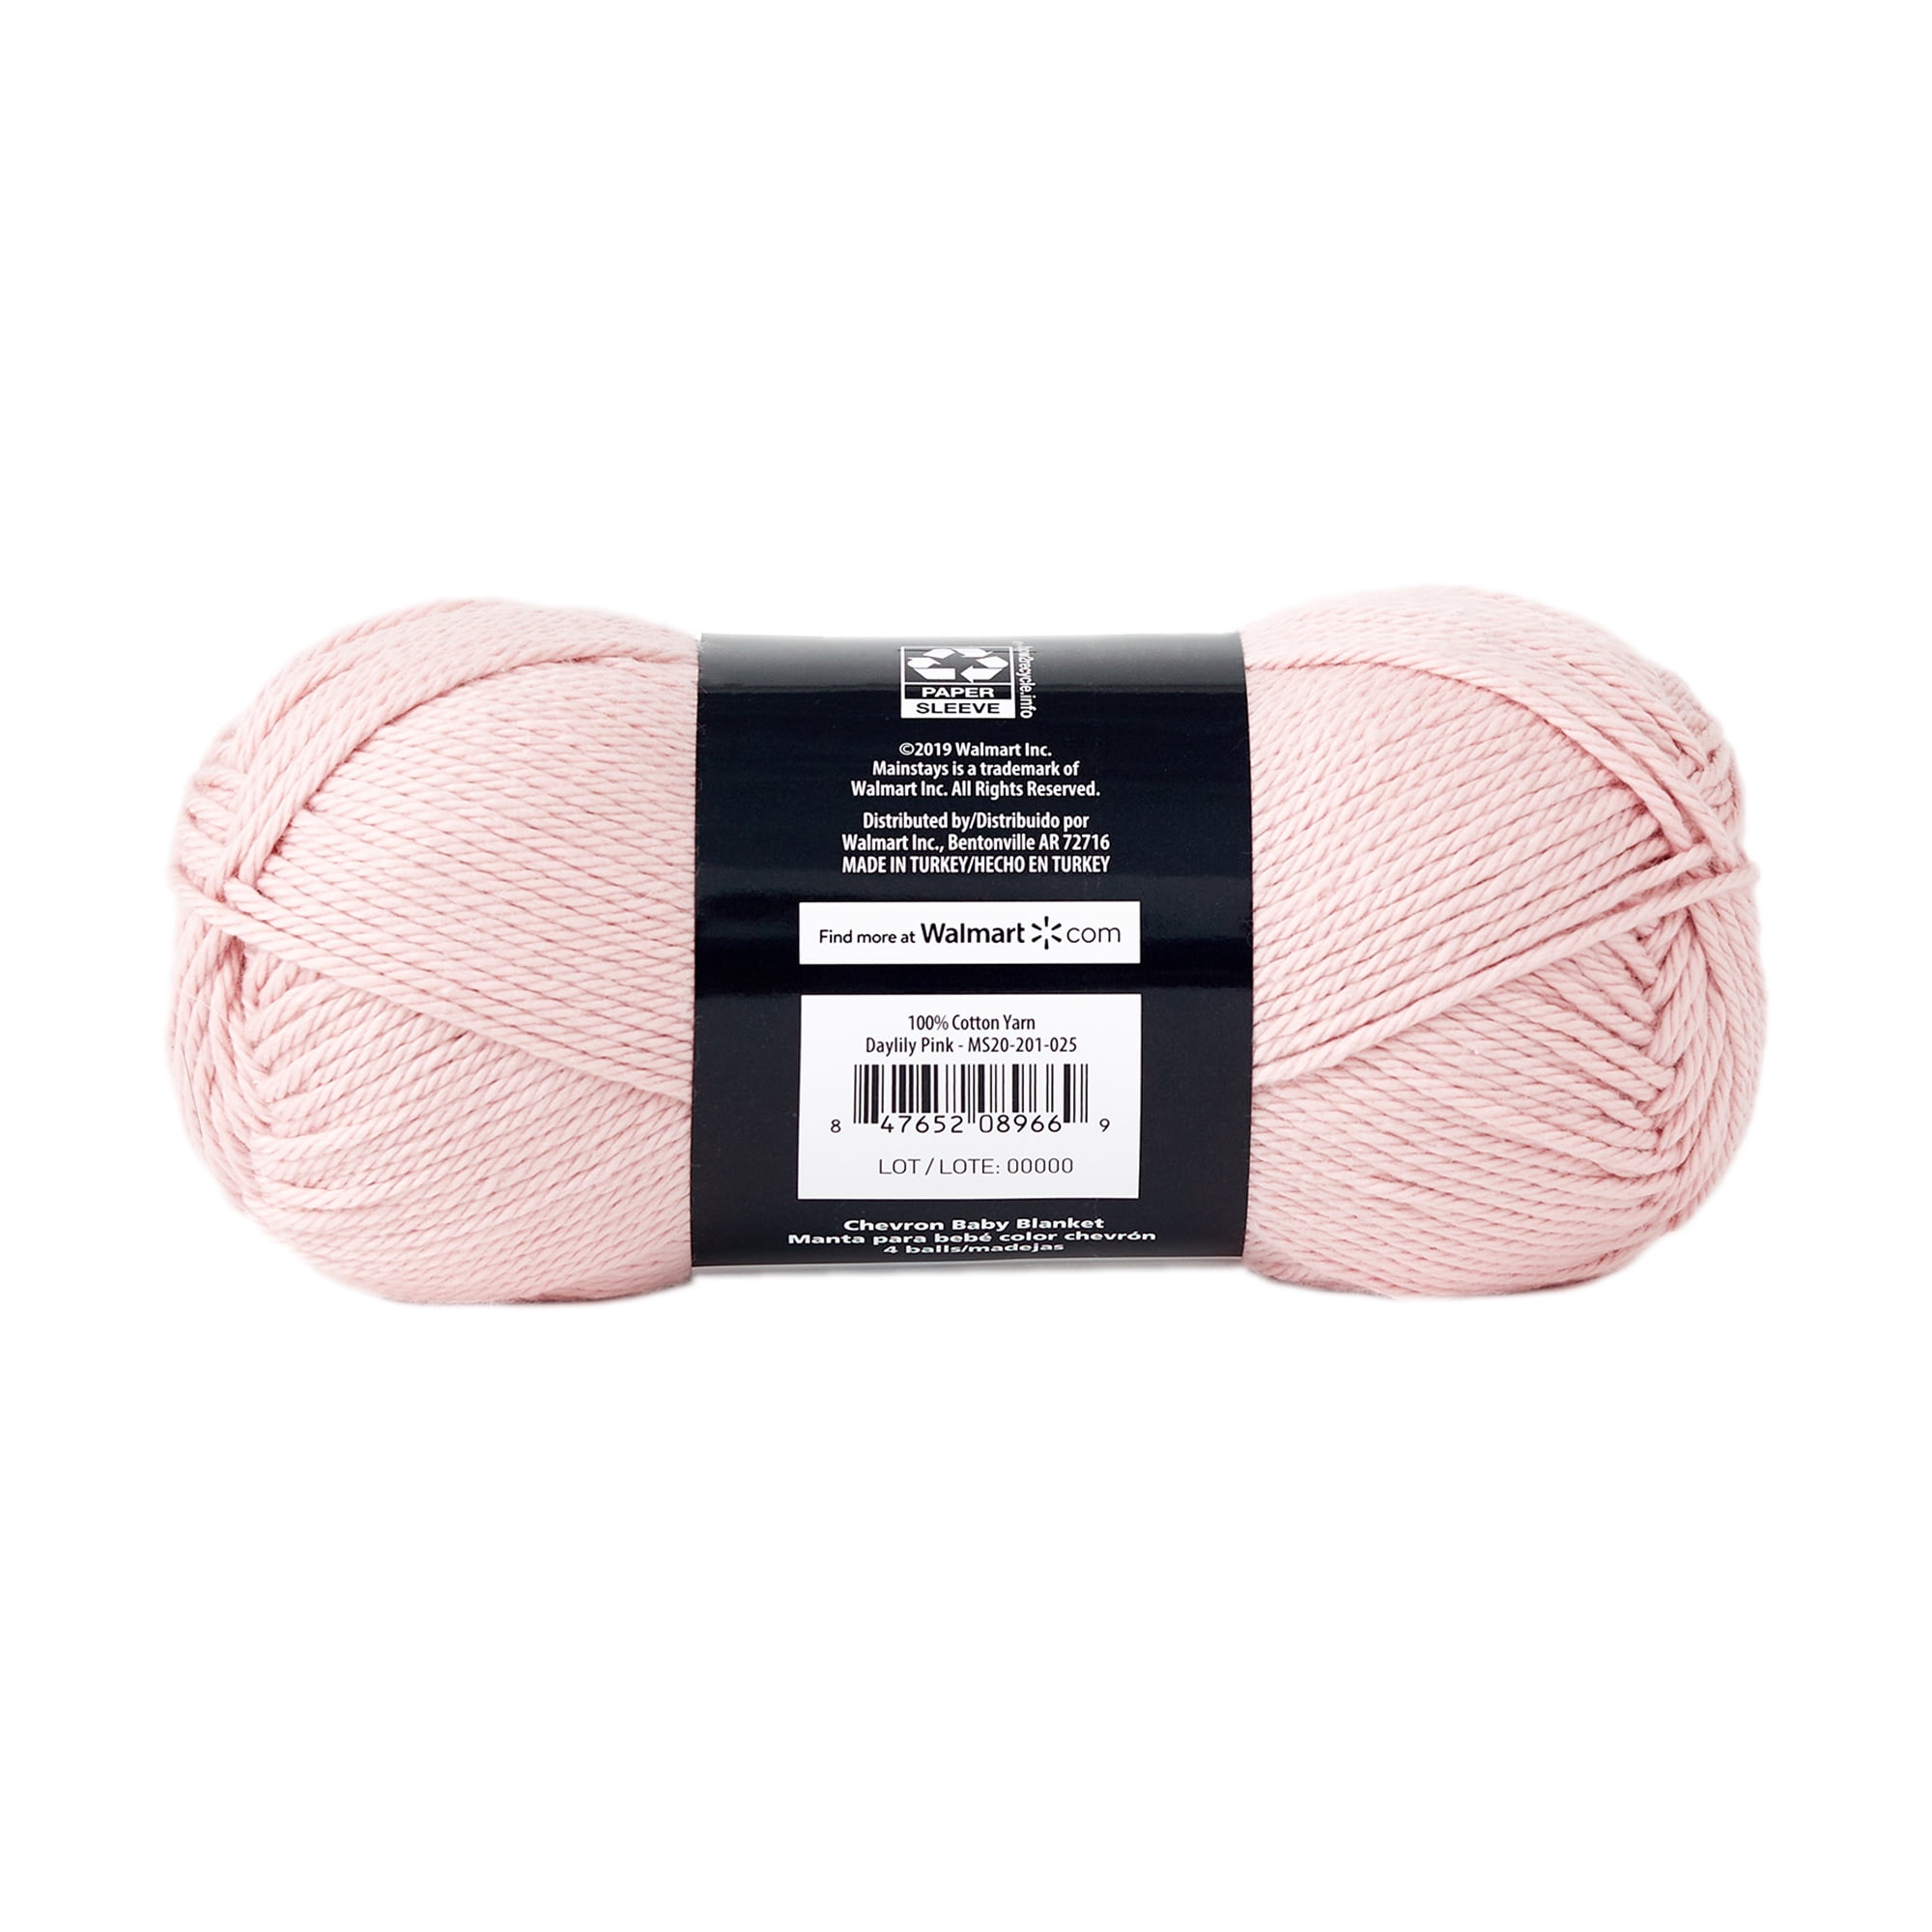 Baiyou 3x50g beginners light pink yarn, 260 yards light pink yarn for